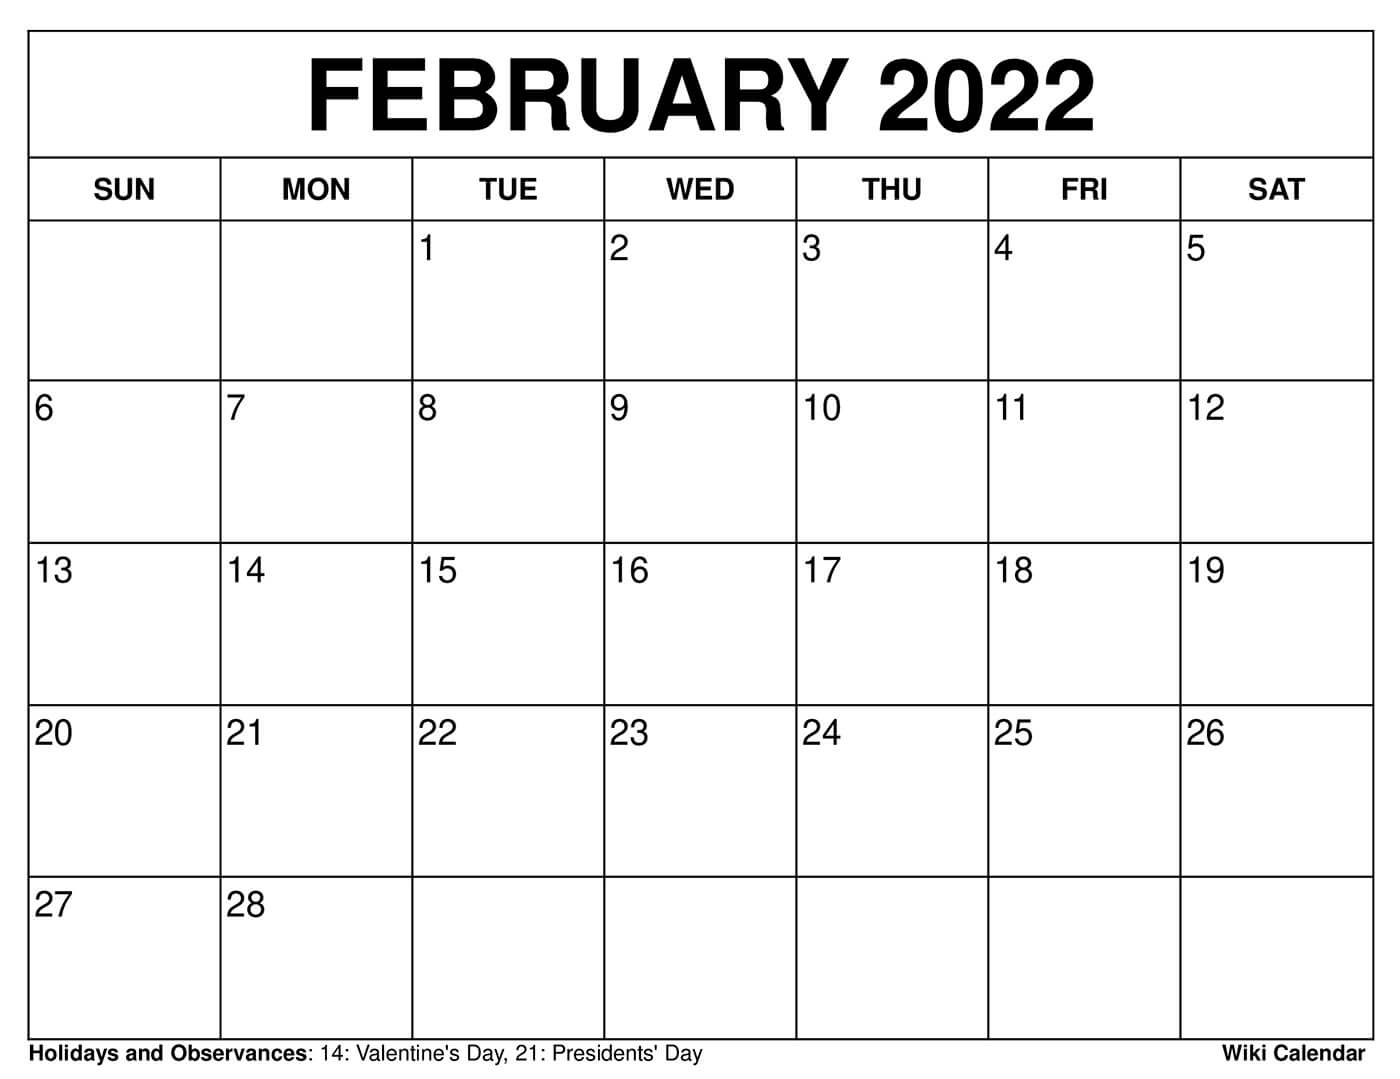 Feb 2022 Calendar With Holidays Free Printable February 2022 Calendars - Wiki Calendar